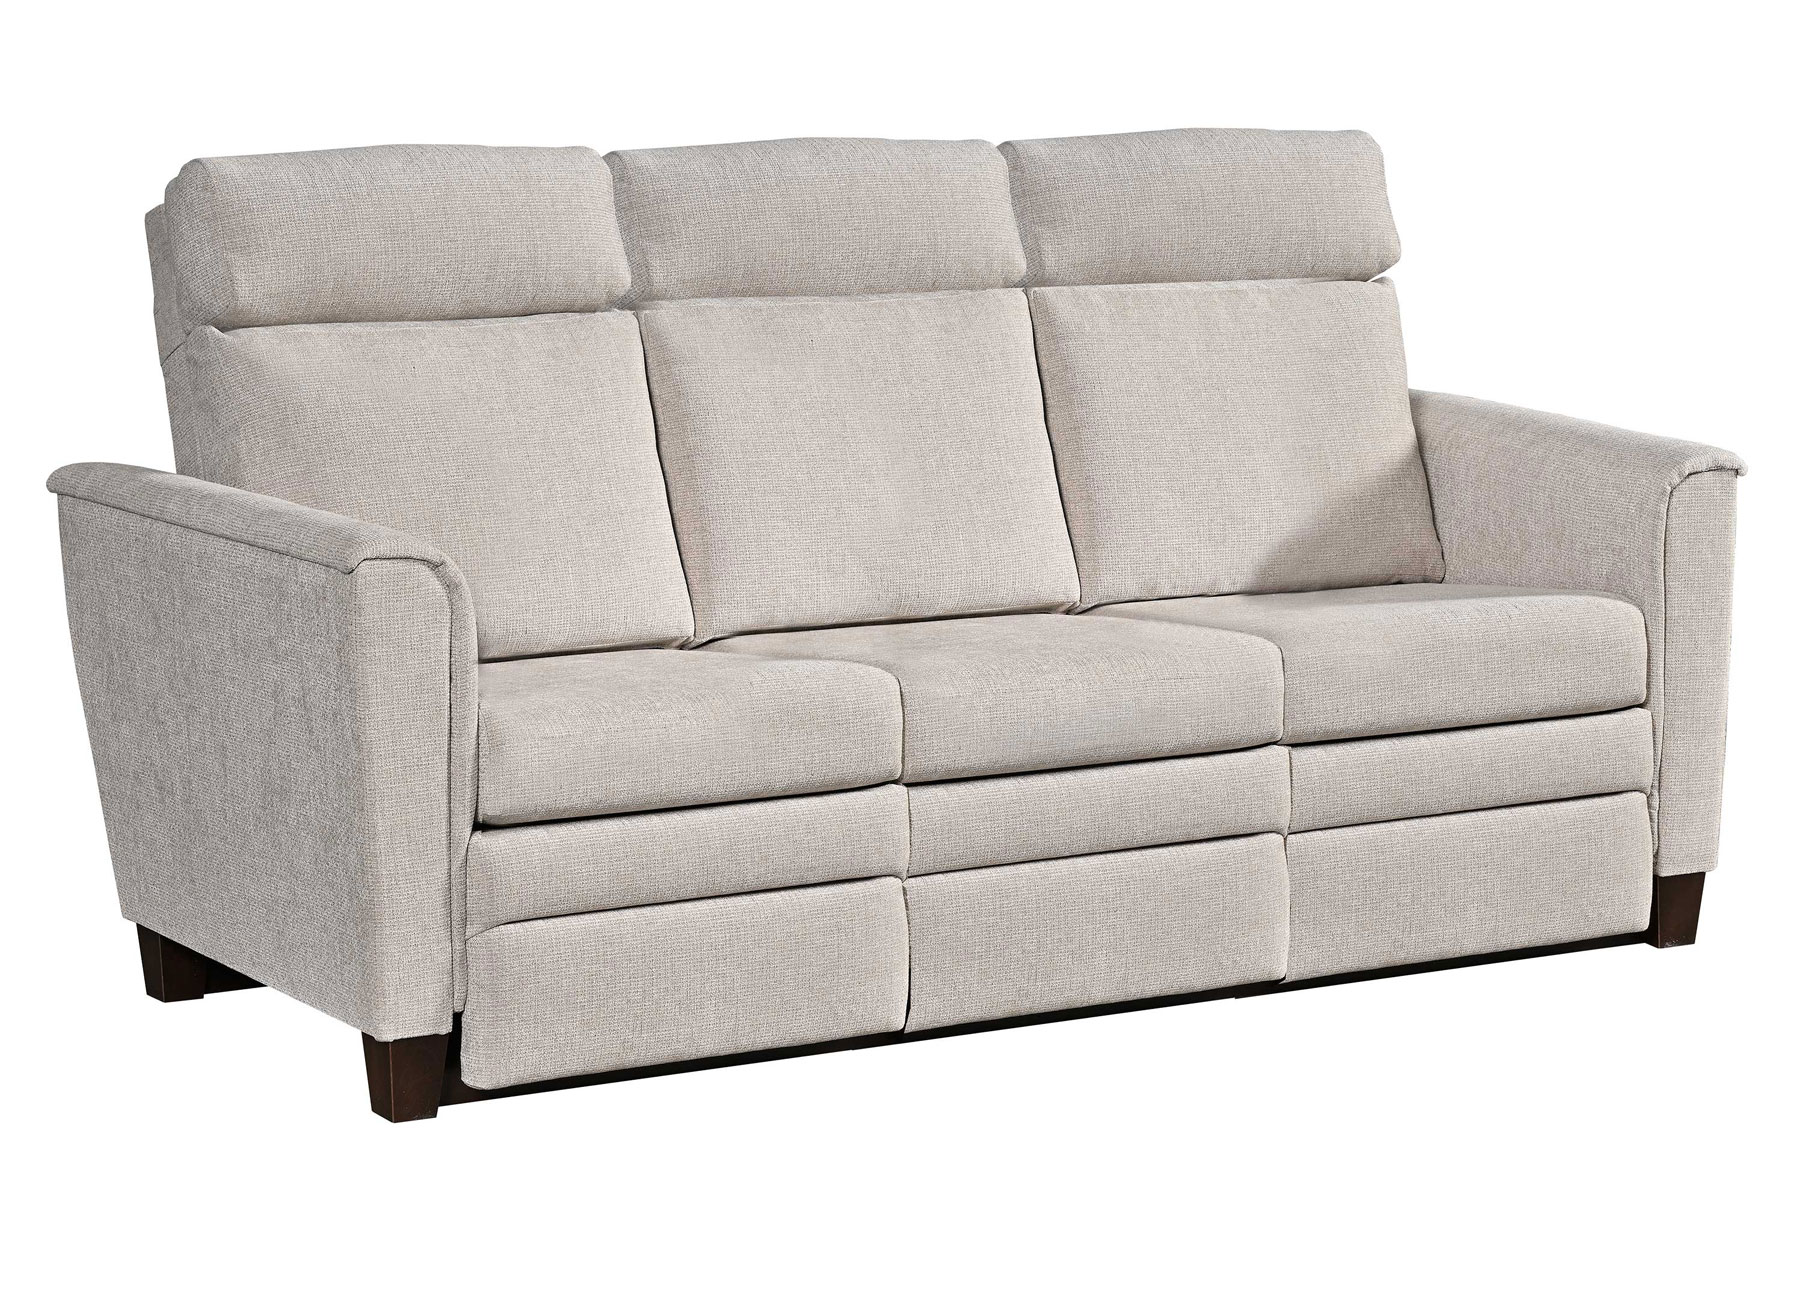 Biltmore Reclining Sofa